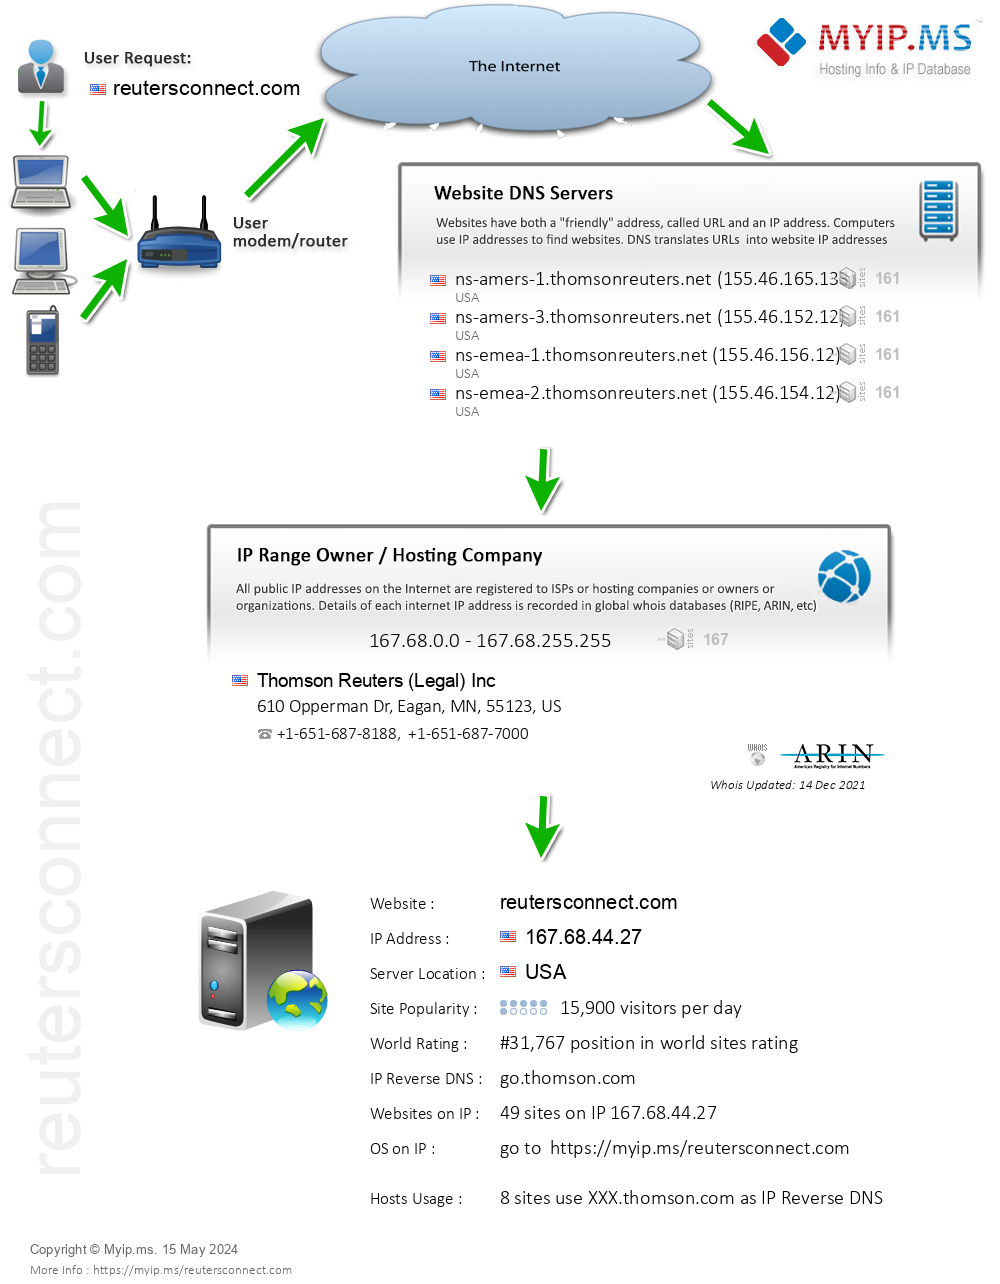 Reutersconnect.com - Website Hosting Visual IP Diagram